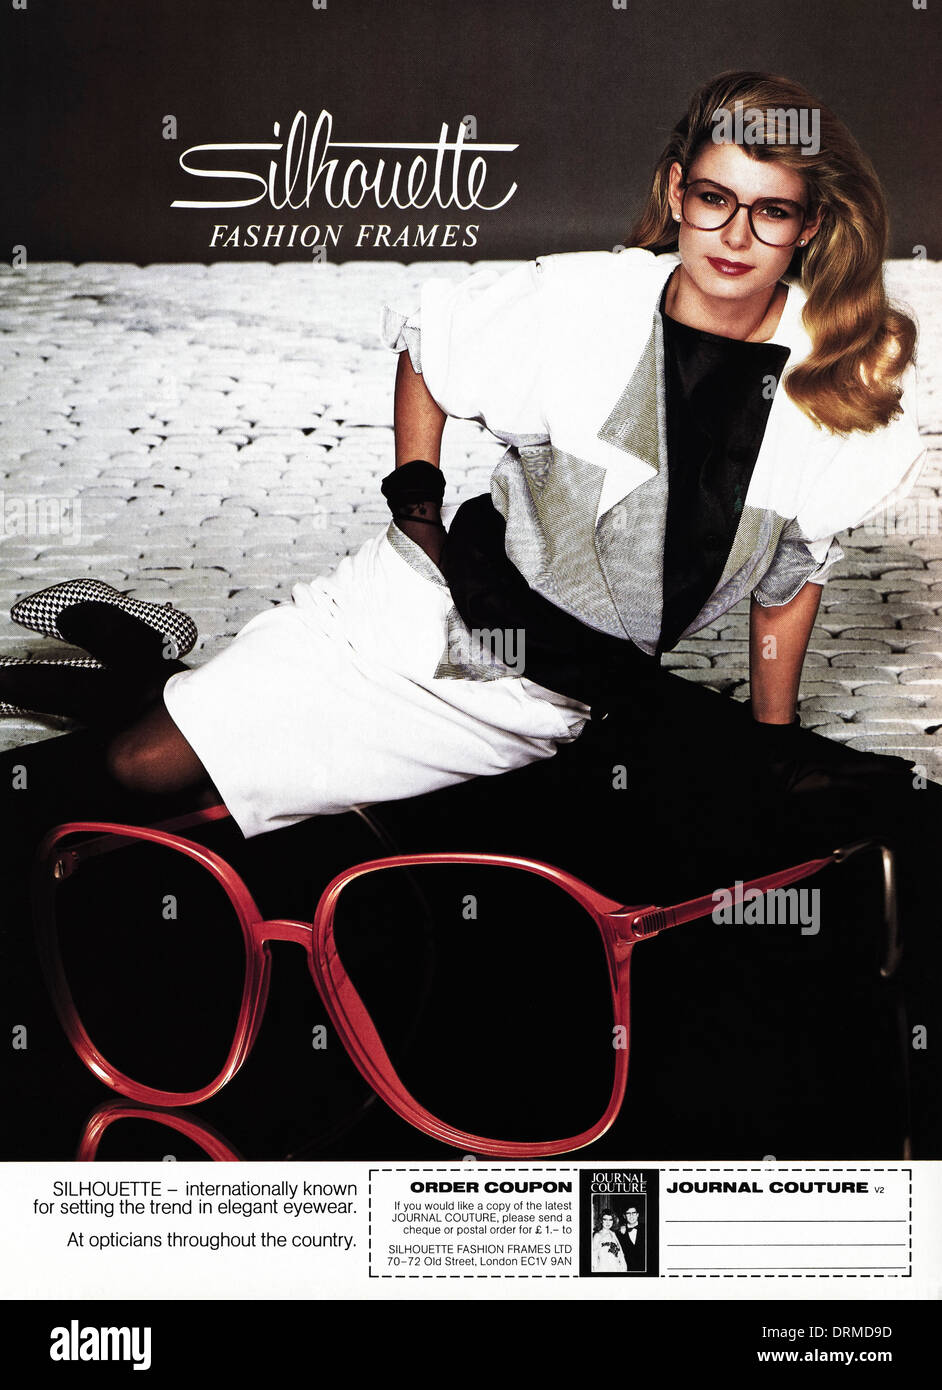 1980s fashion magazine advertisement advertising SILHOUETTE FASHION FRAMES eyewear, advert circa 1983 Stock Photo